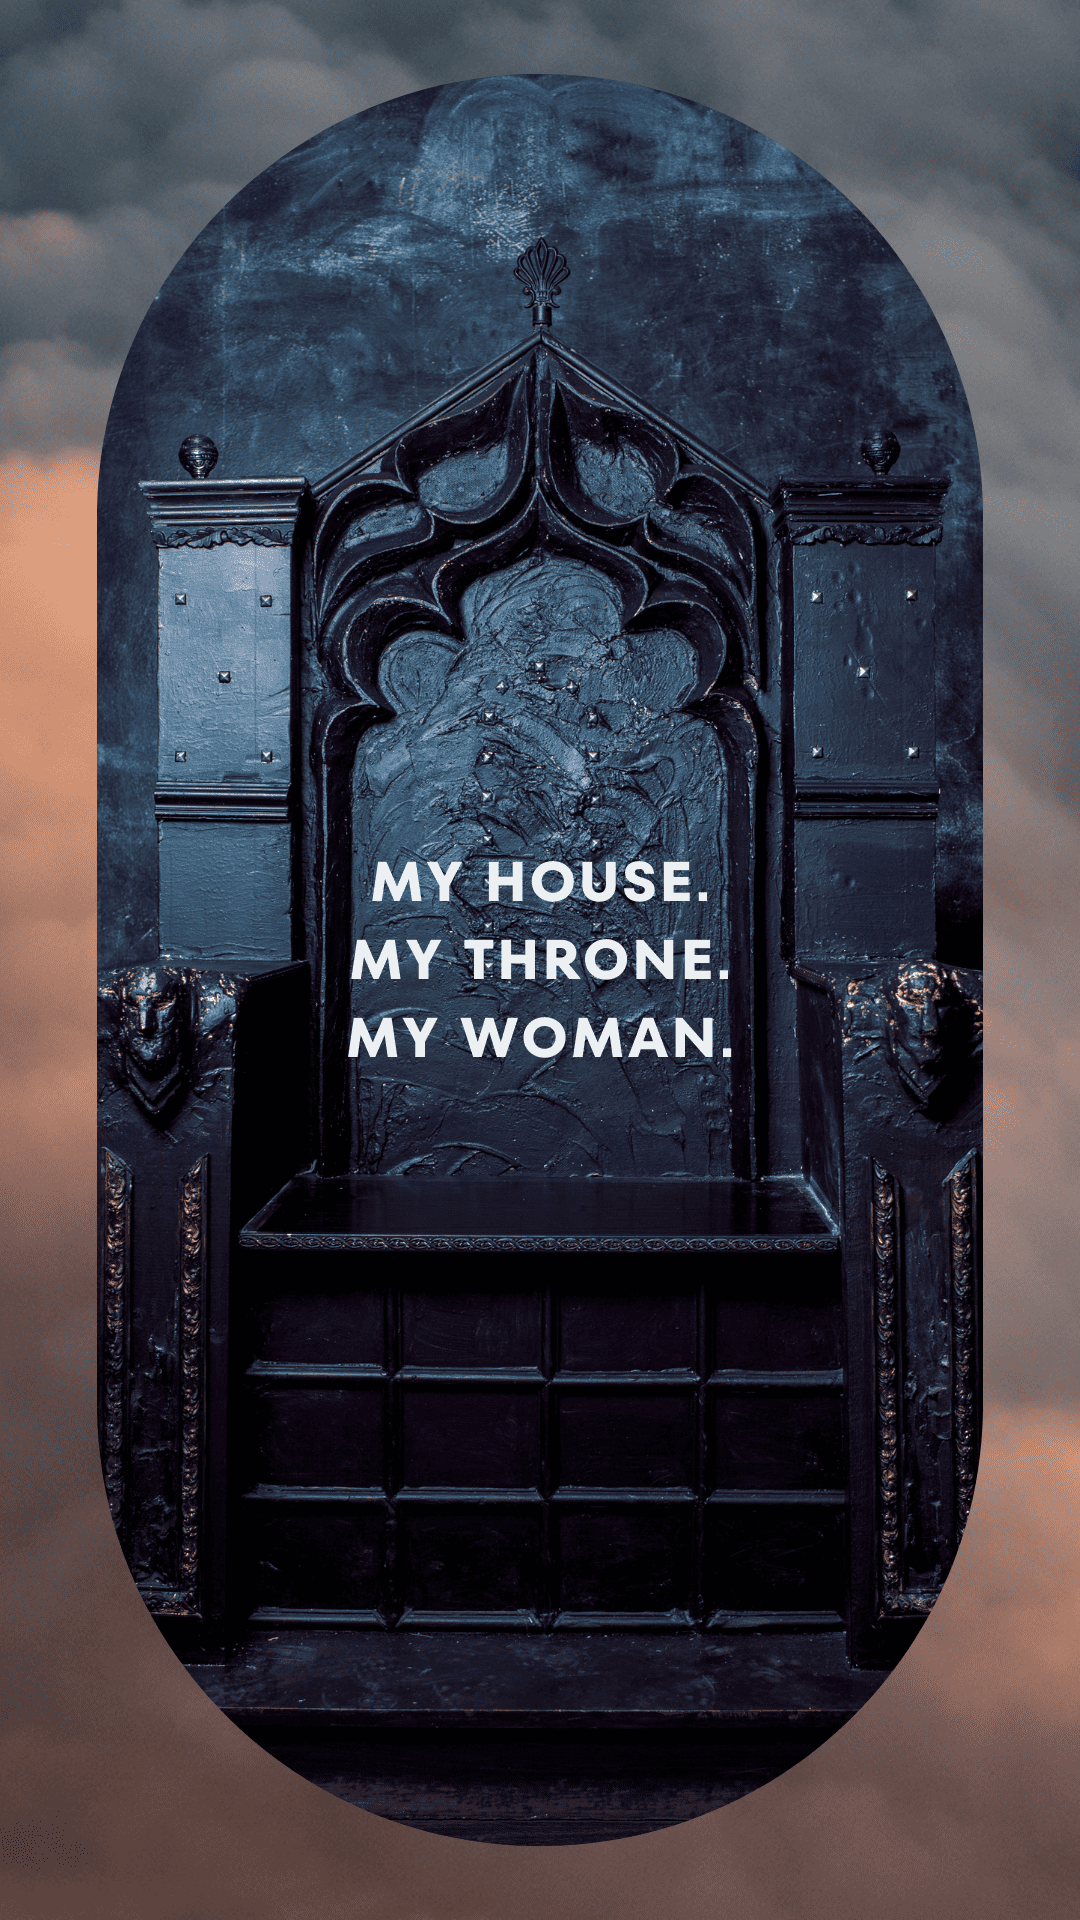 my house. my throne. my woman.